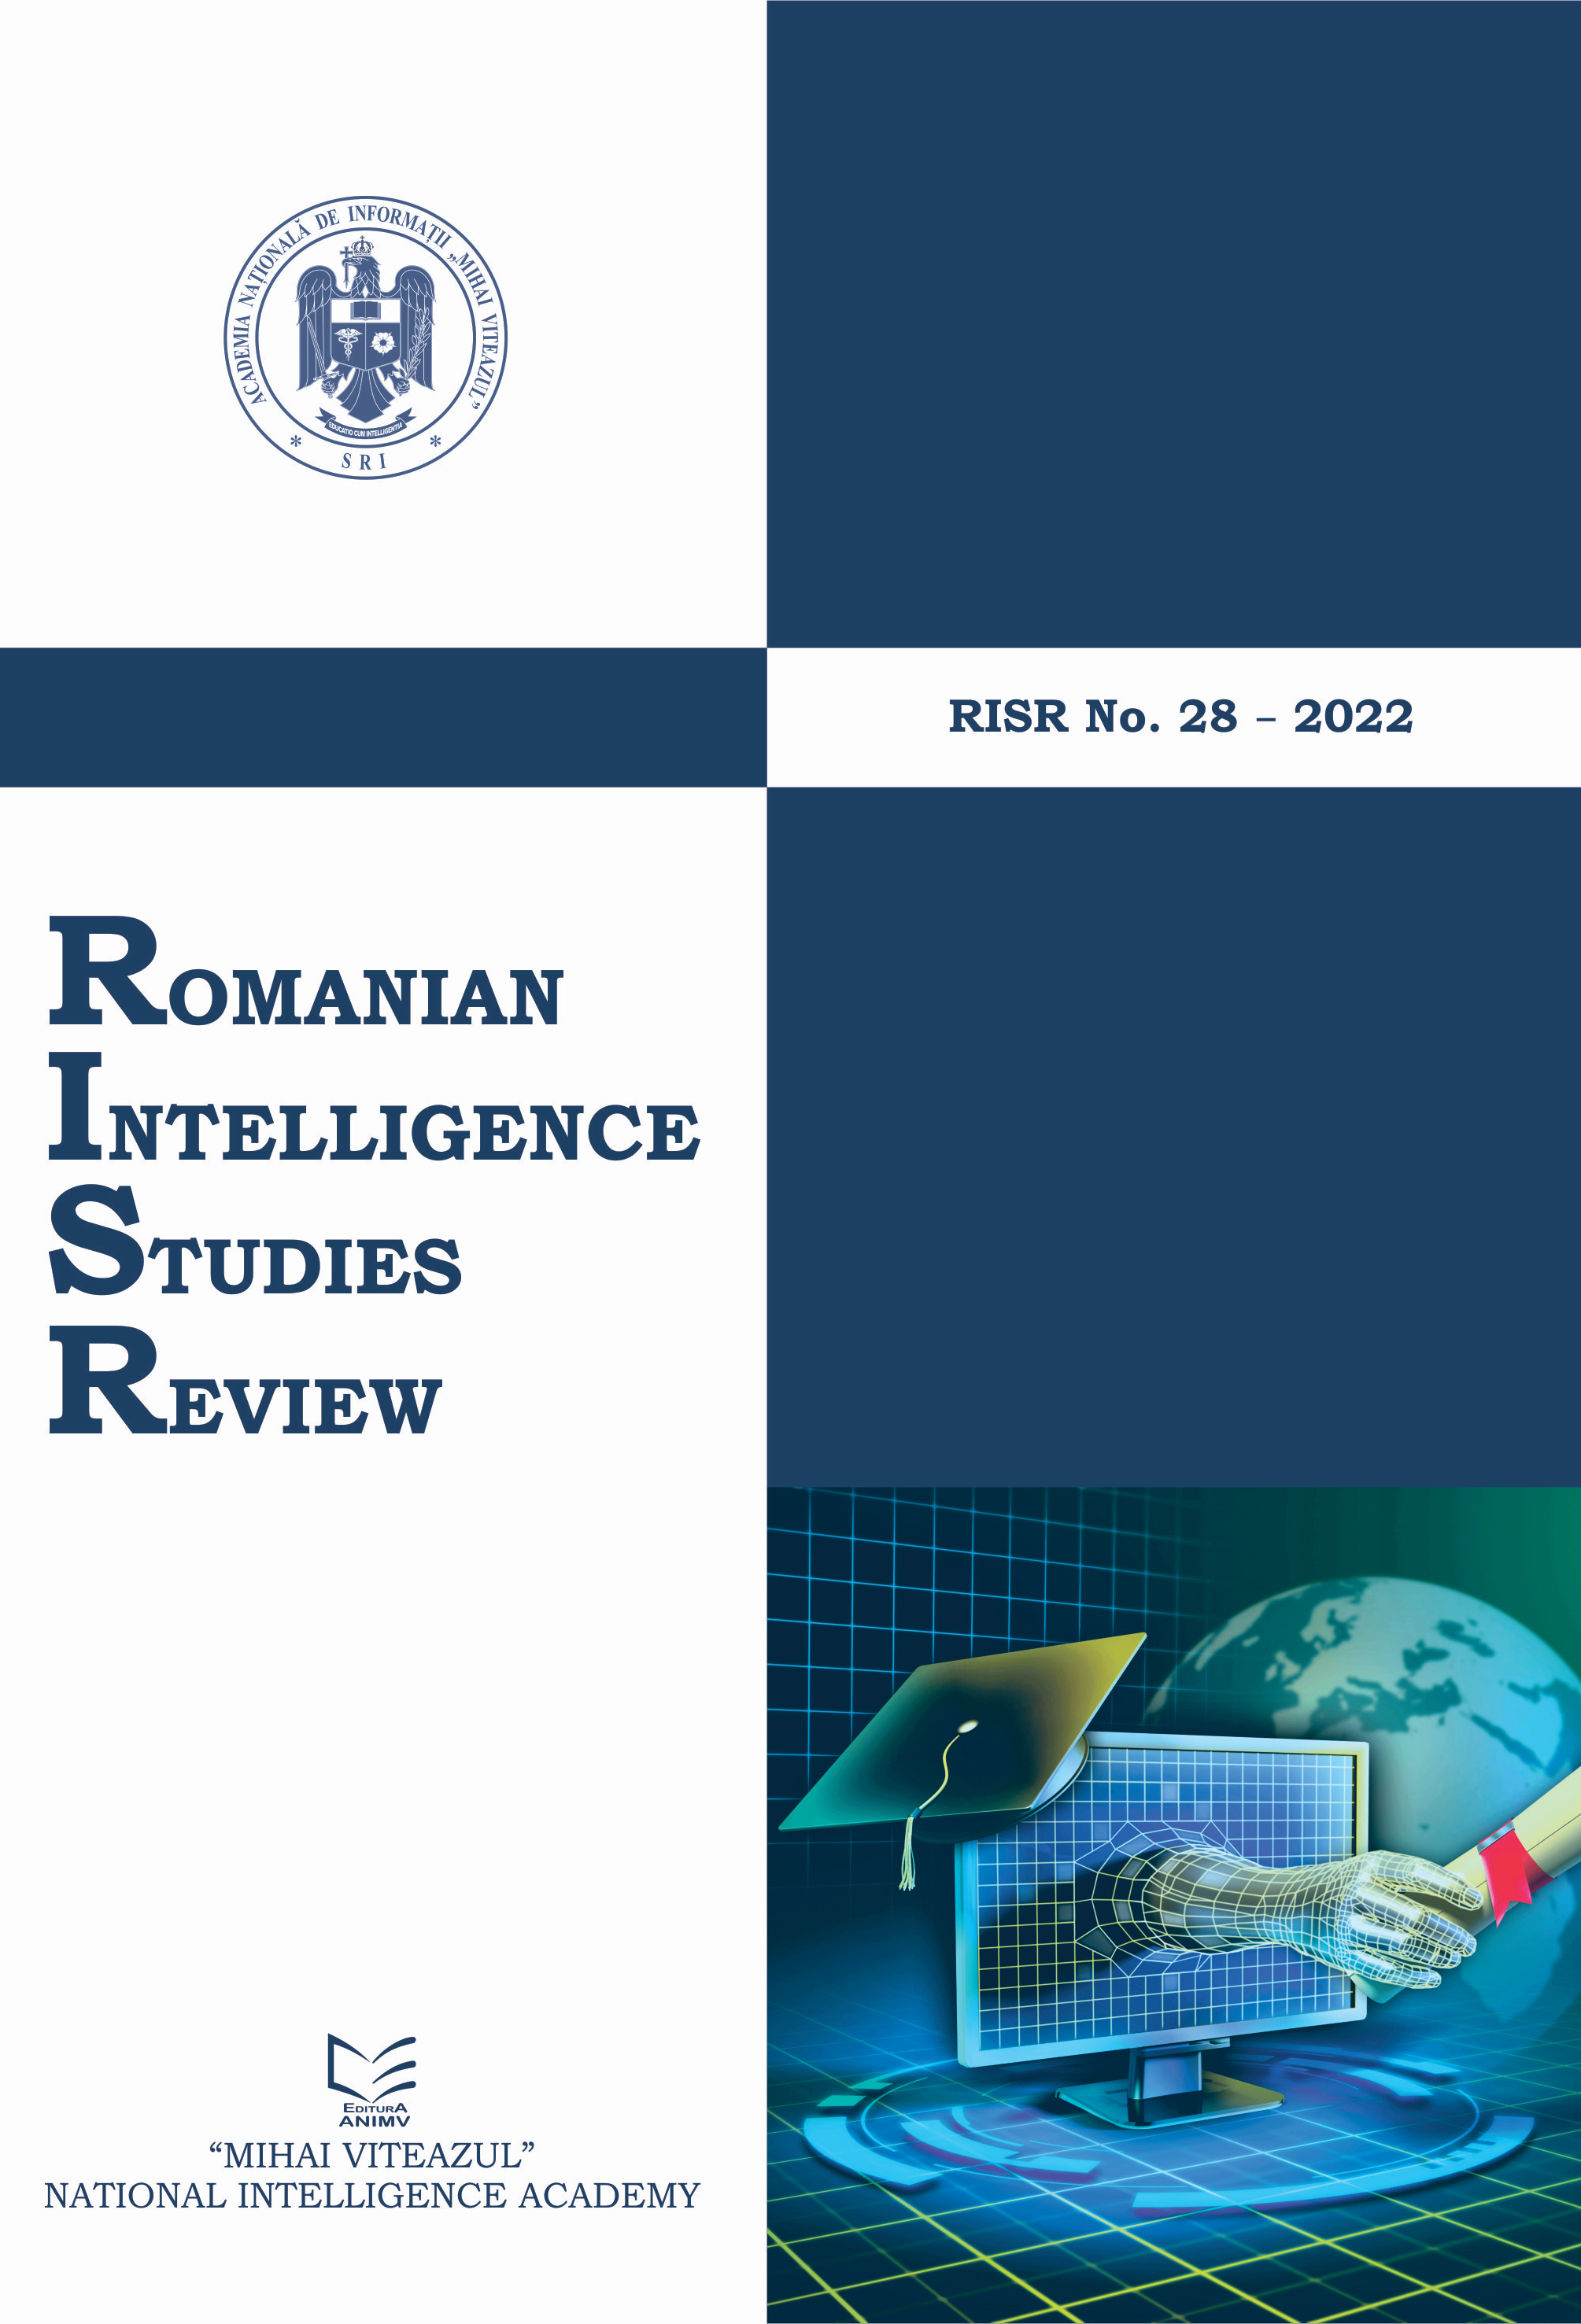 The First Modern Romanian Intelligence School Mvnia 30th Anniversary. The message of the Rector of the “Mihai Viteazul” National Intelligence Academy, Professor Adrian-Liviu IVAN